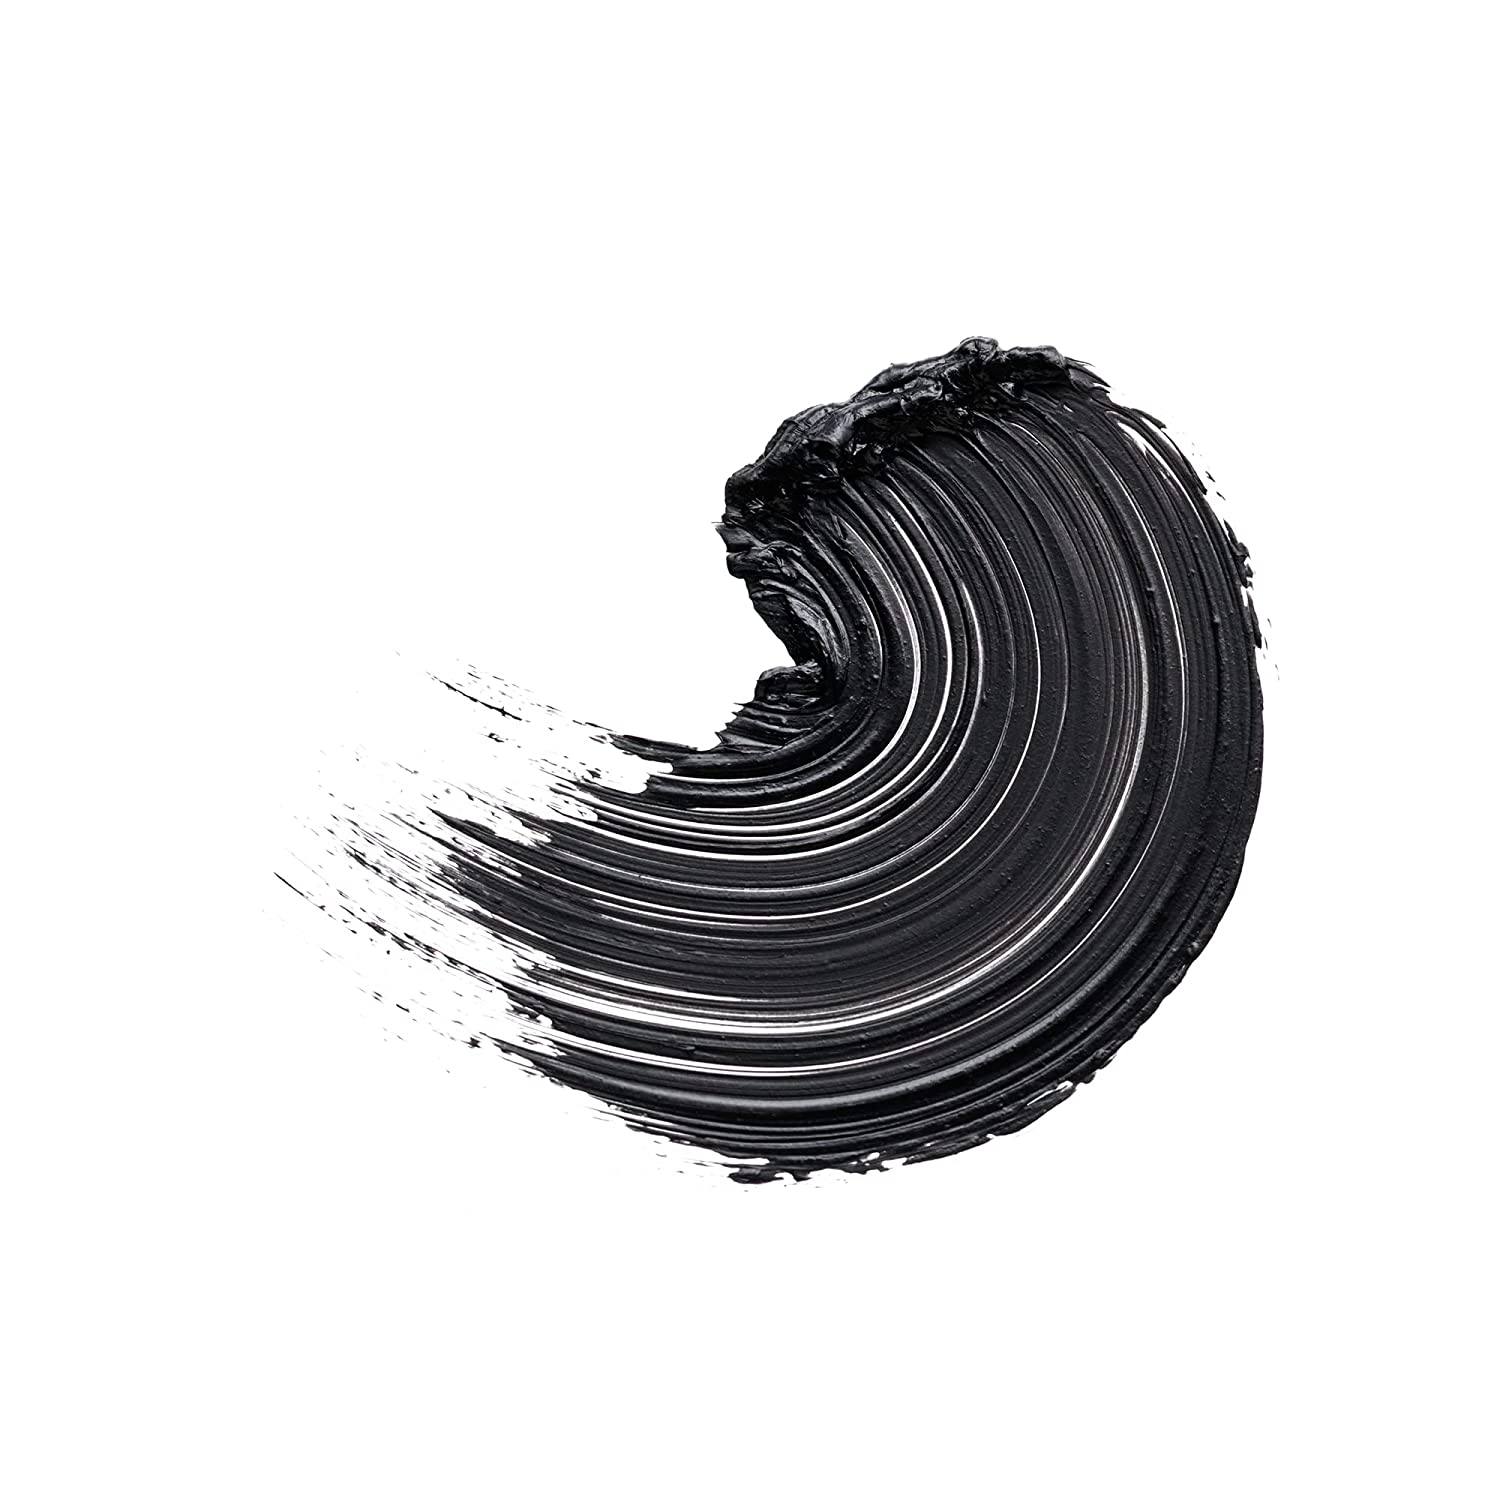 Catrice Allround Mascara Ultra Black Mascara for Volume and Length, No. 010 Blackest Carbon Black Ever, Black, Extended, Ultra Black, Matte, Vegan, Perfume, Alcohol-Free (11 ml), ‎010 ever